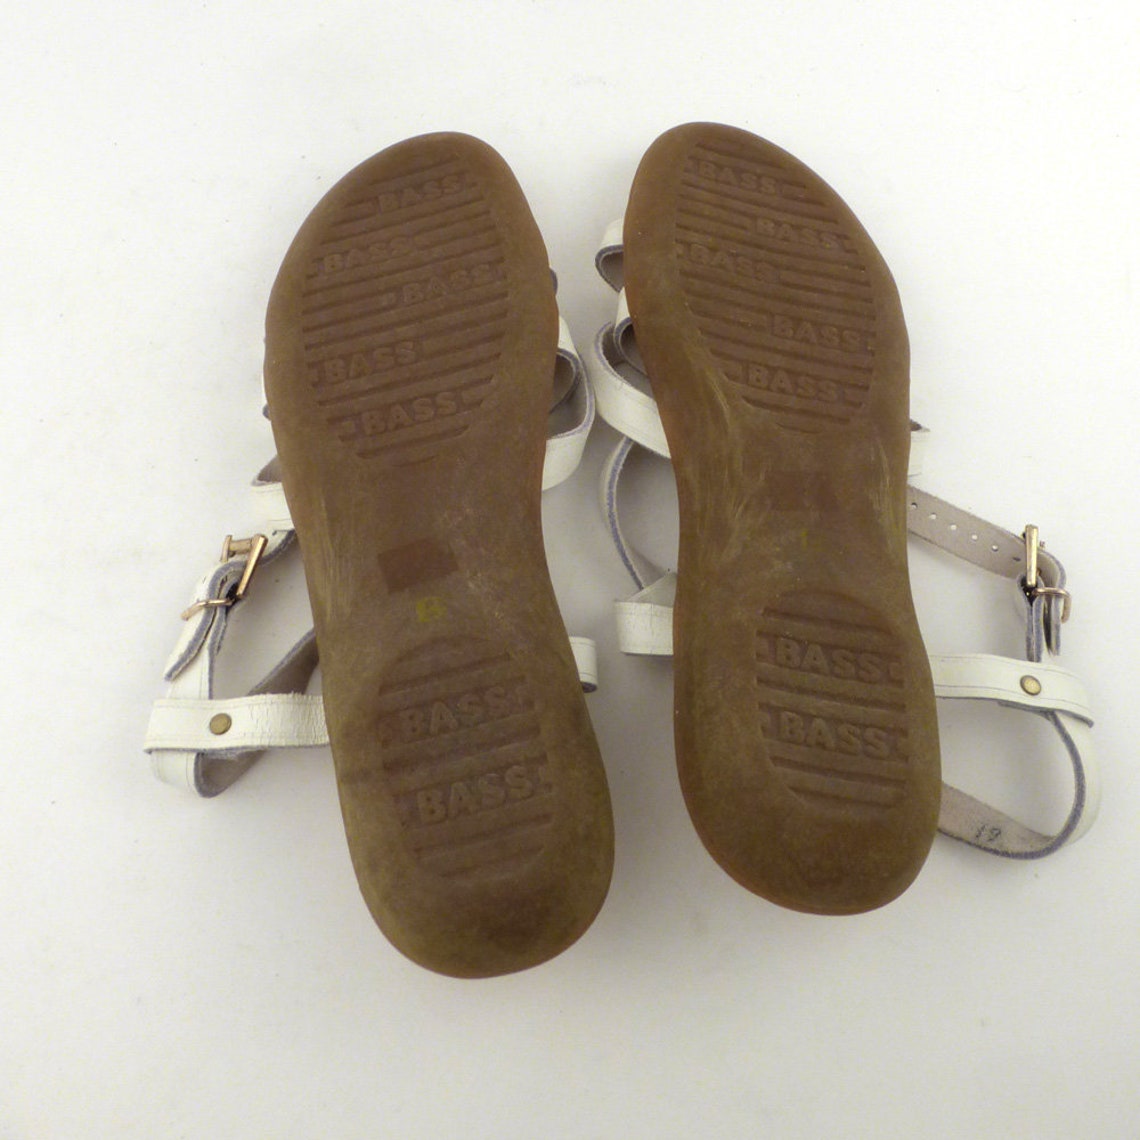 Bass Sunjuns Sandals Vintage 1980s White leather Women's | Etsy